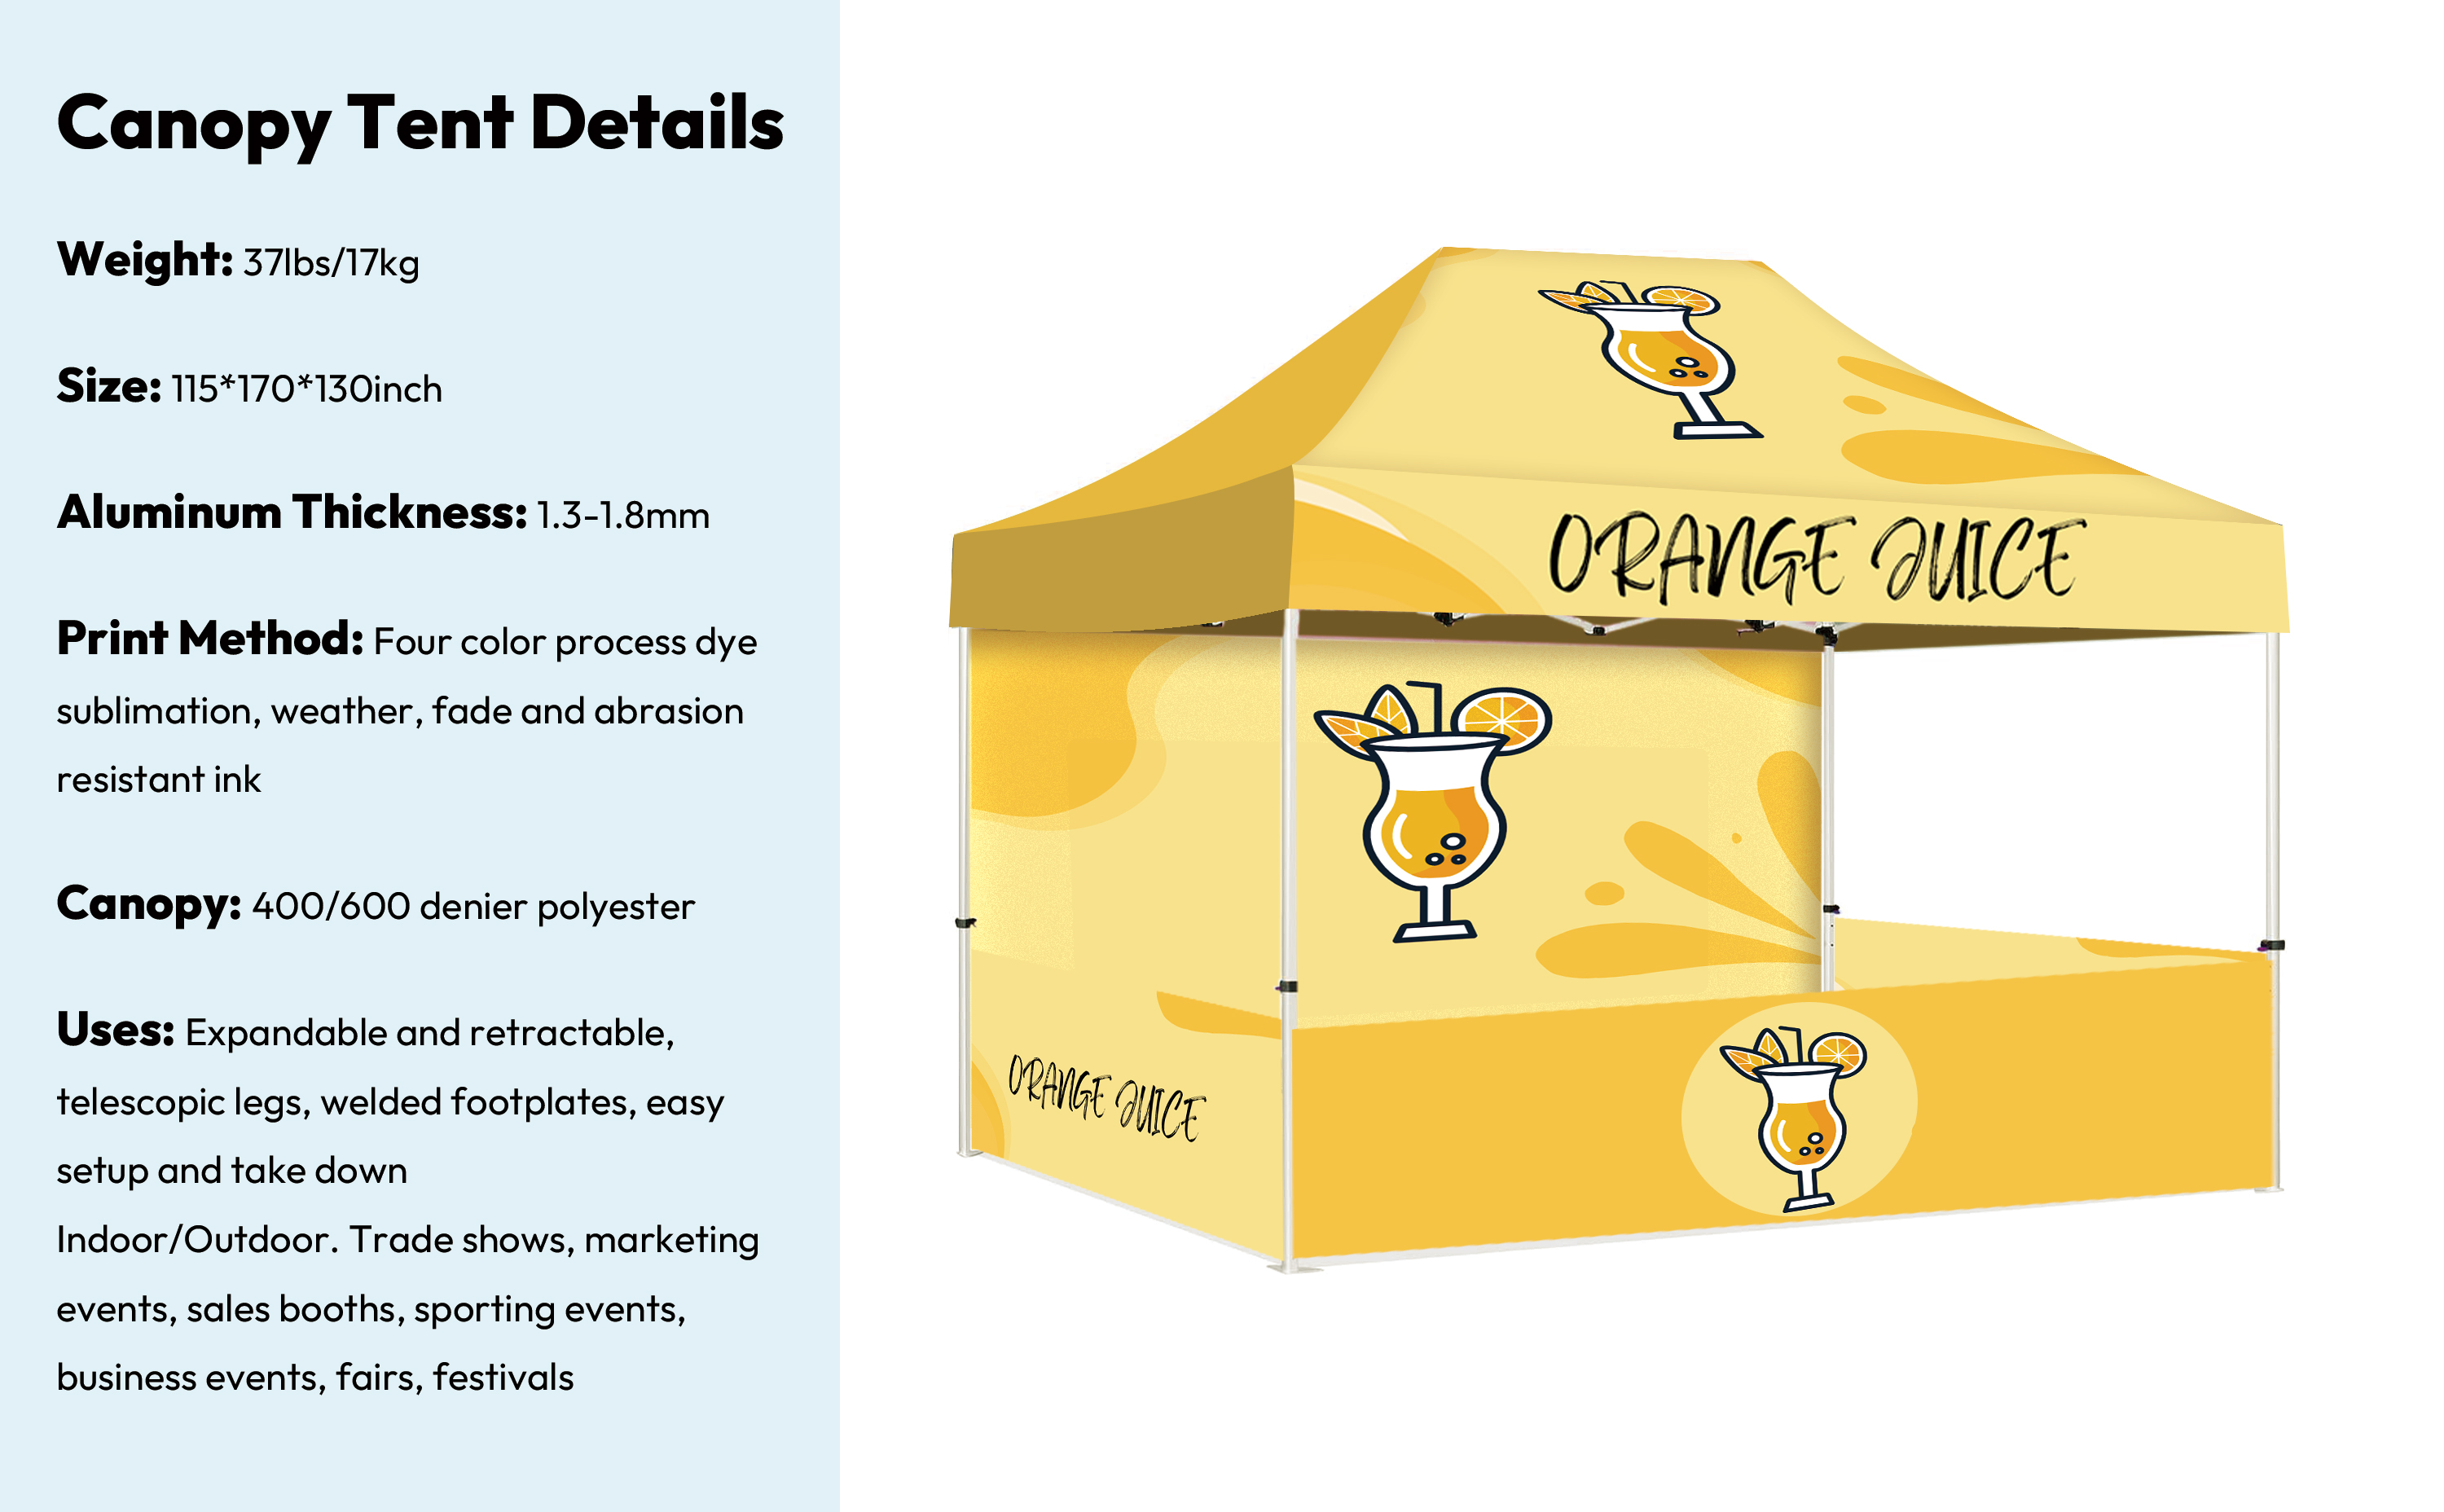 Canopy Tent Details